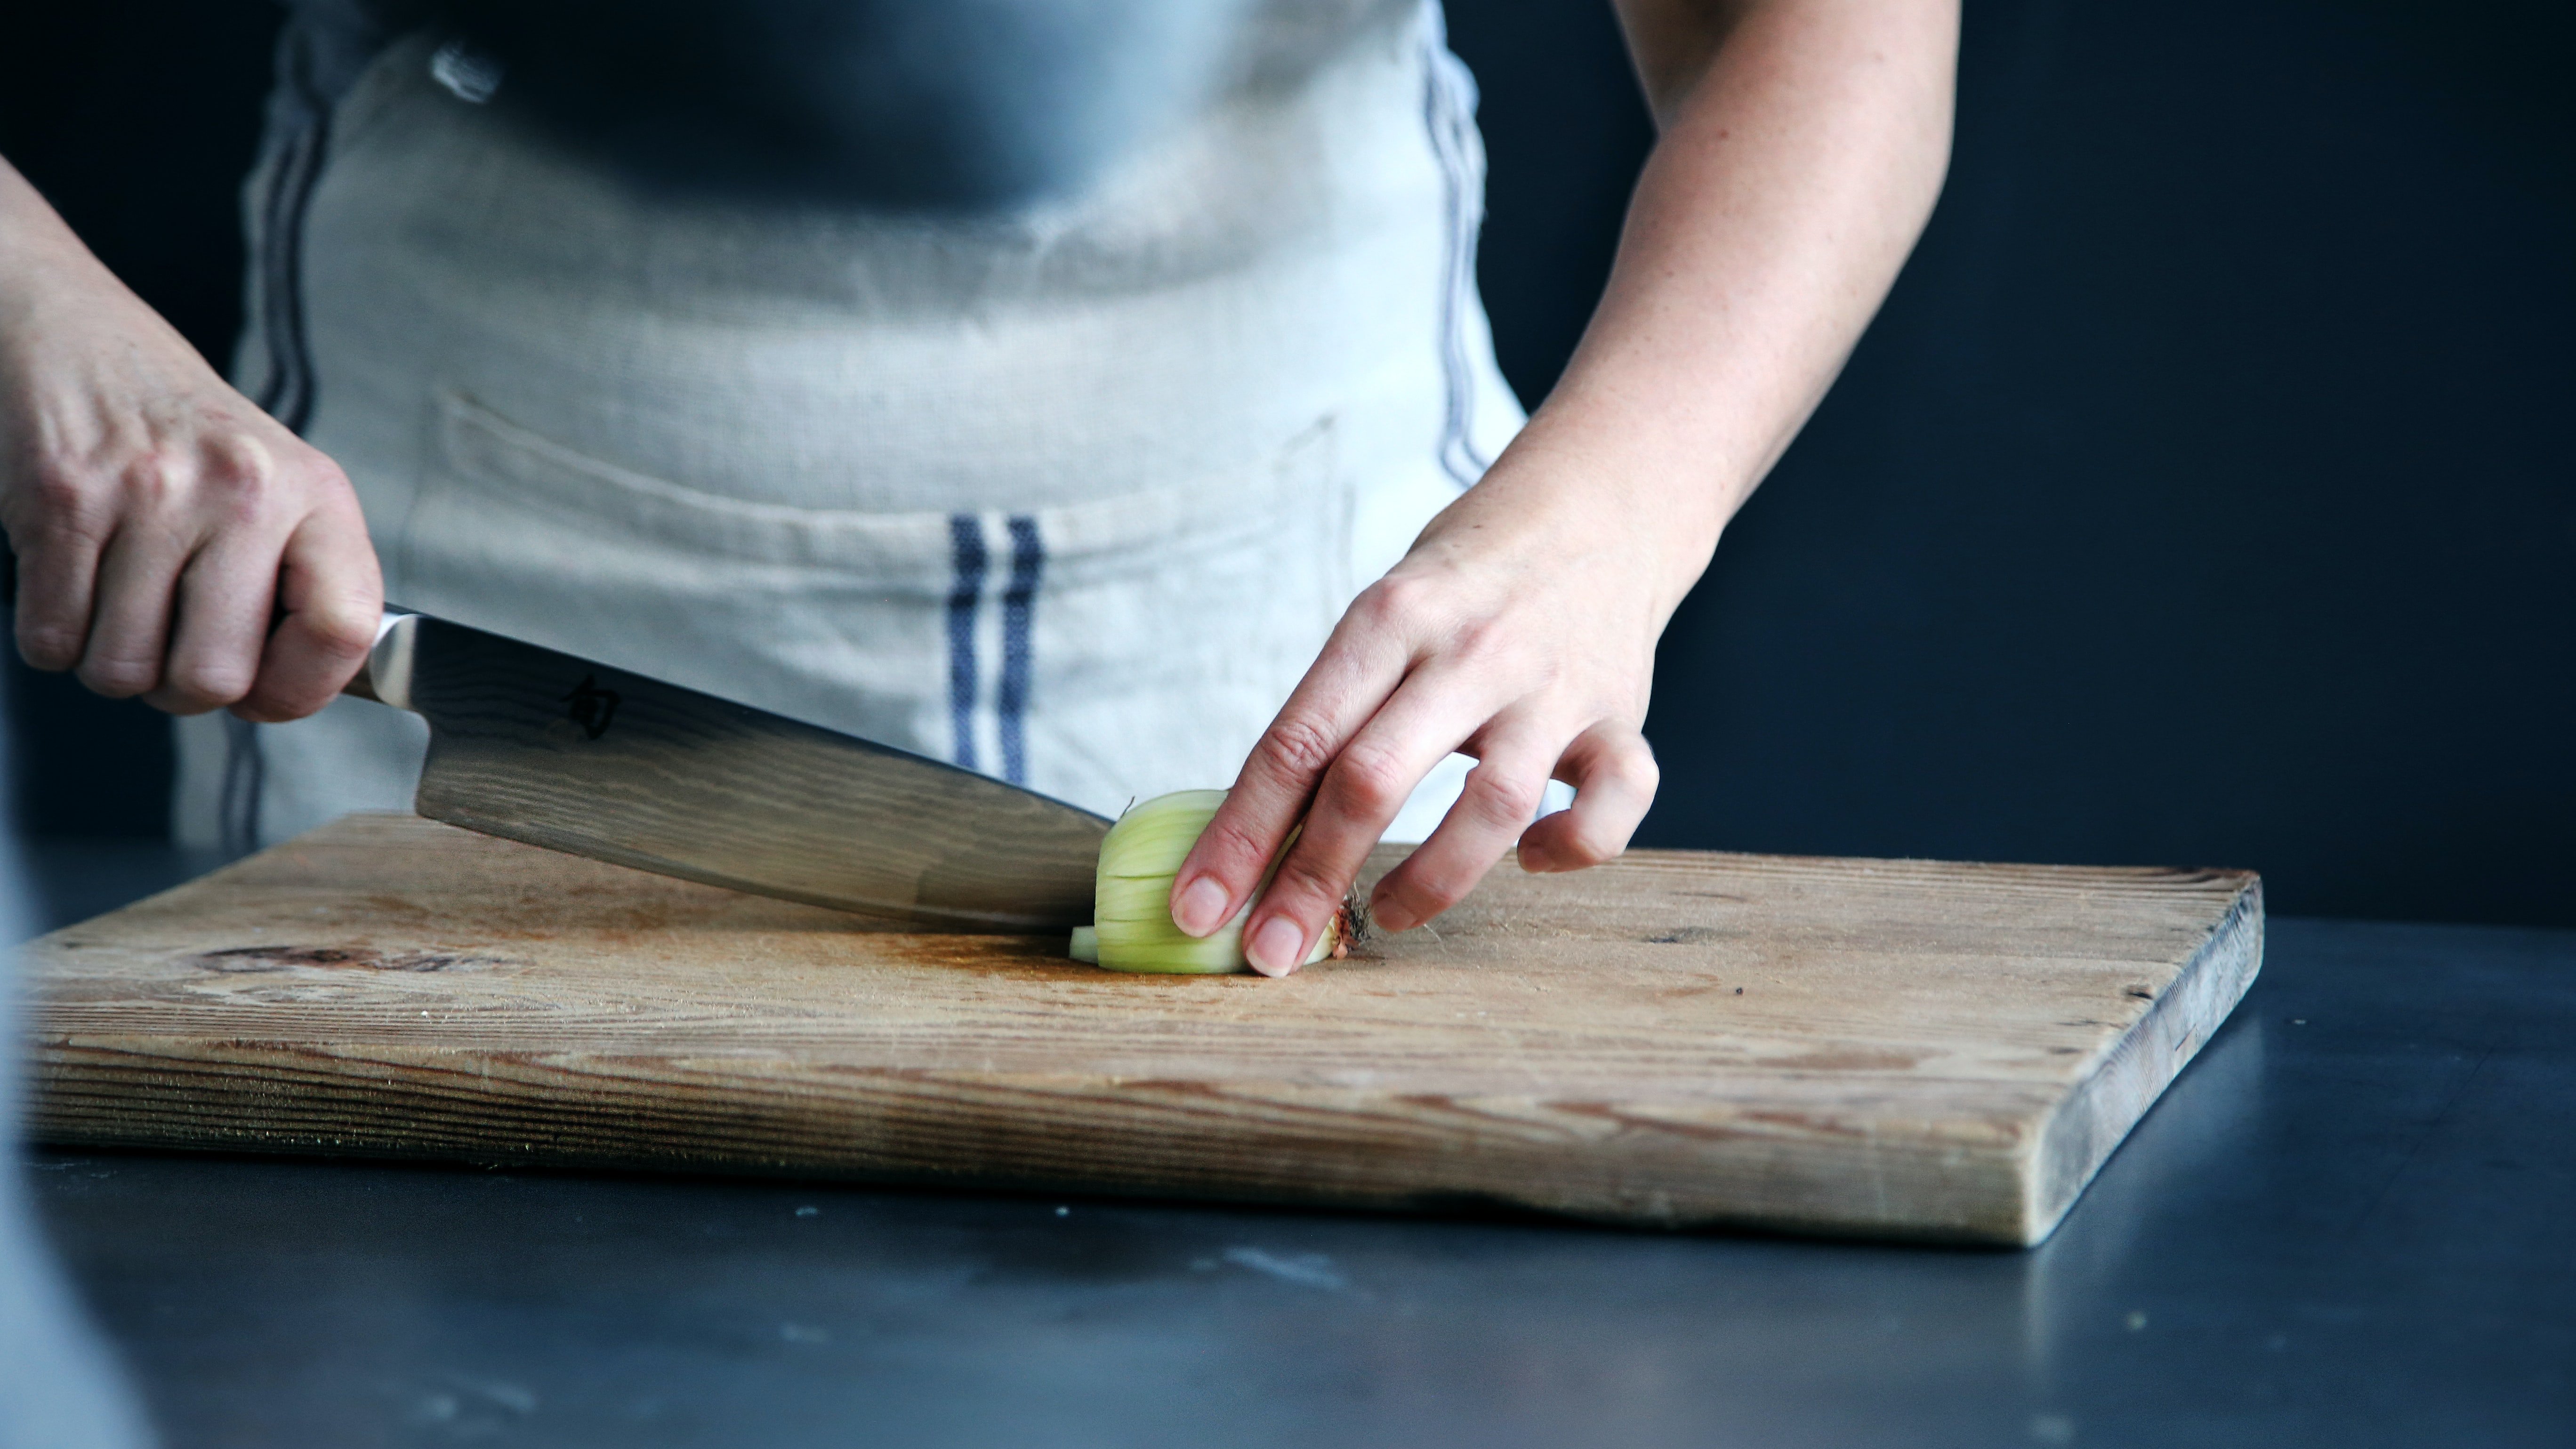 Una persona corta vegetales en una tabla. | Foto: Unsplash